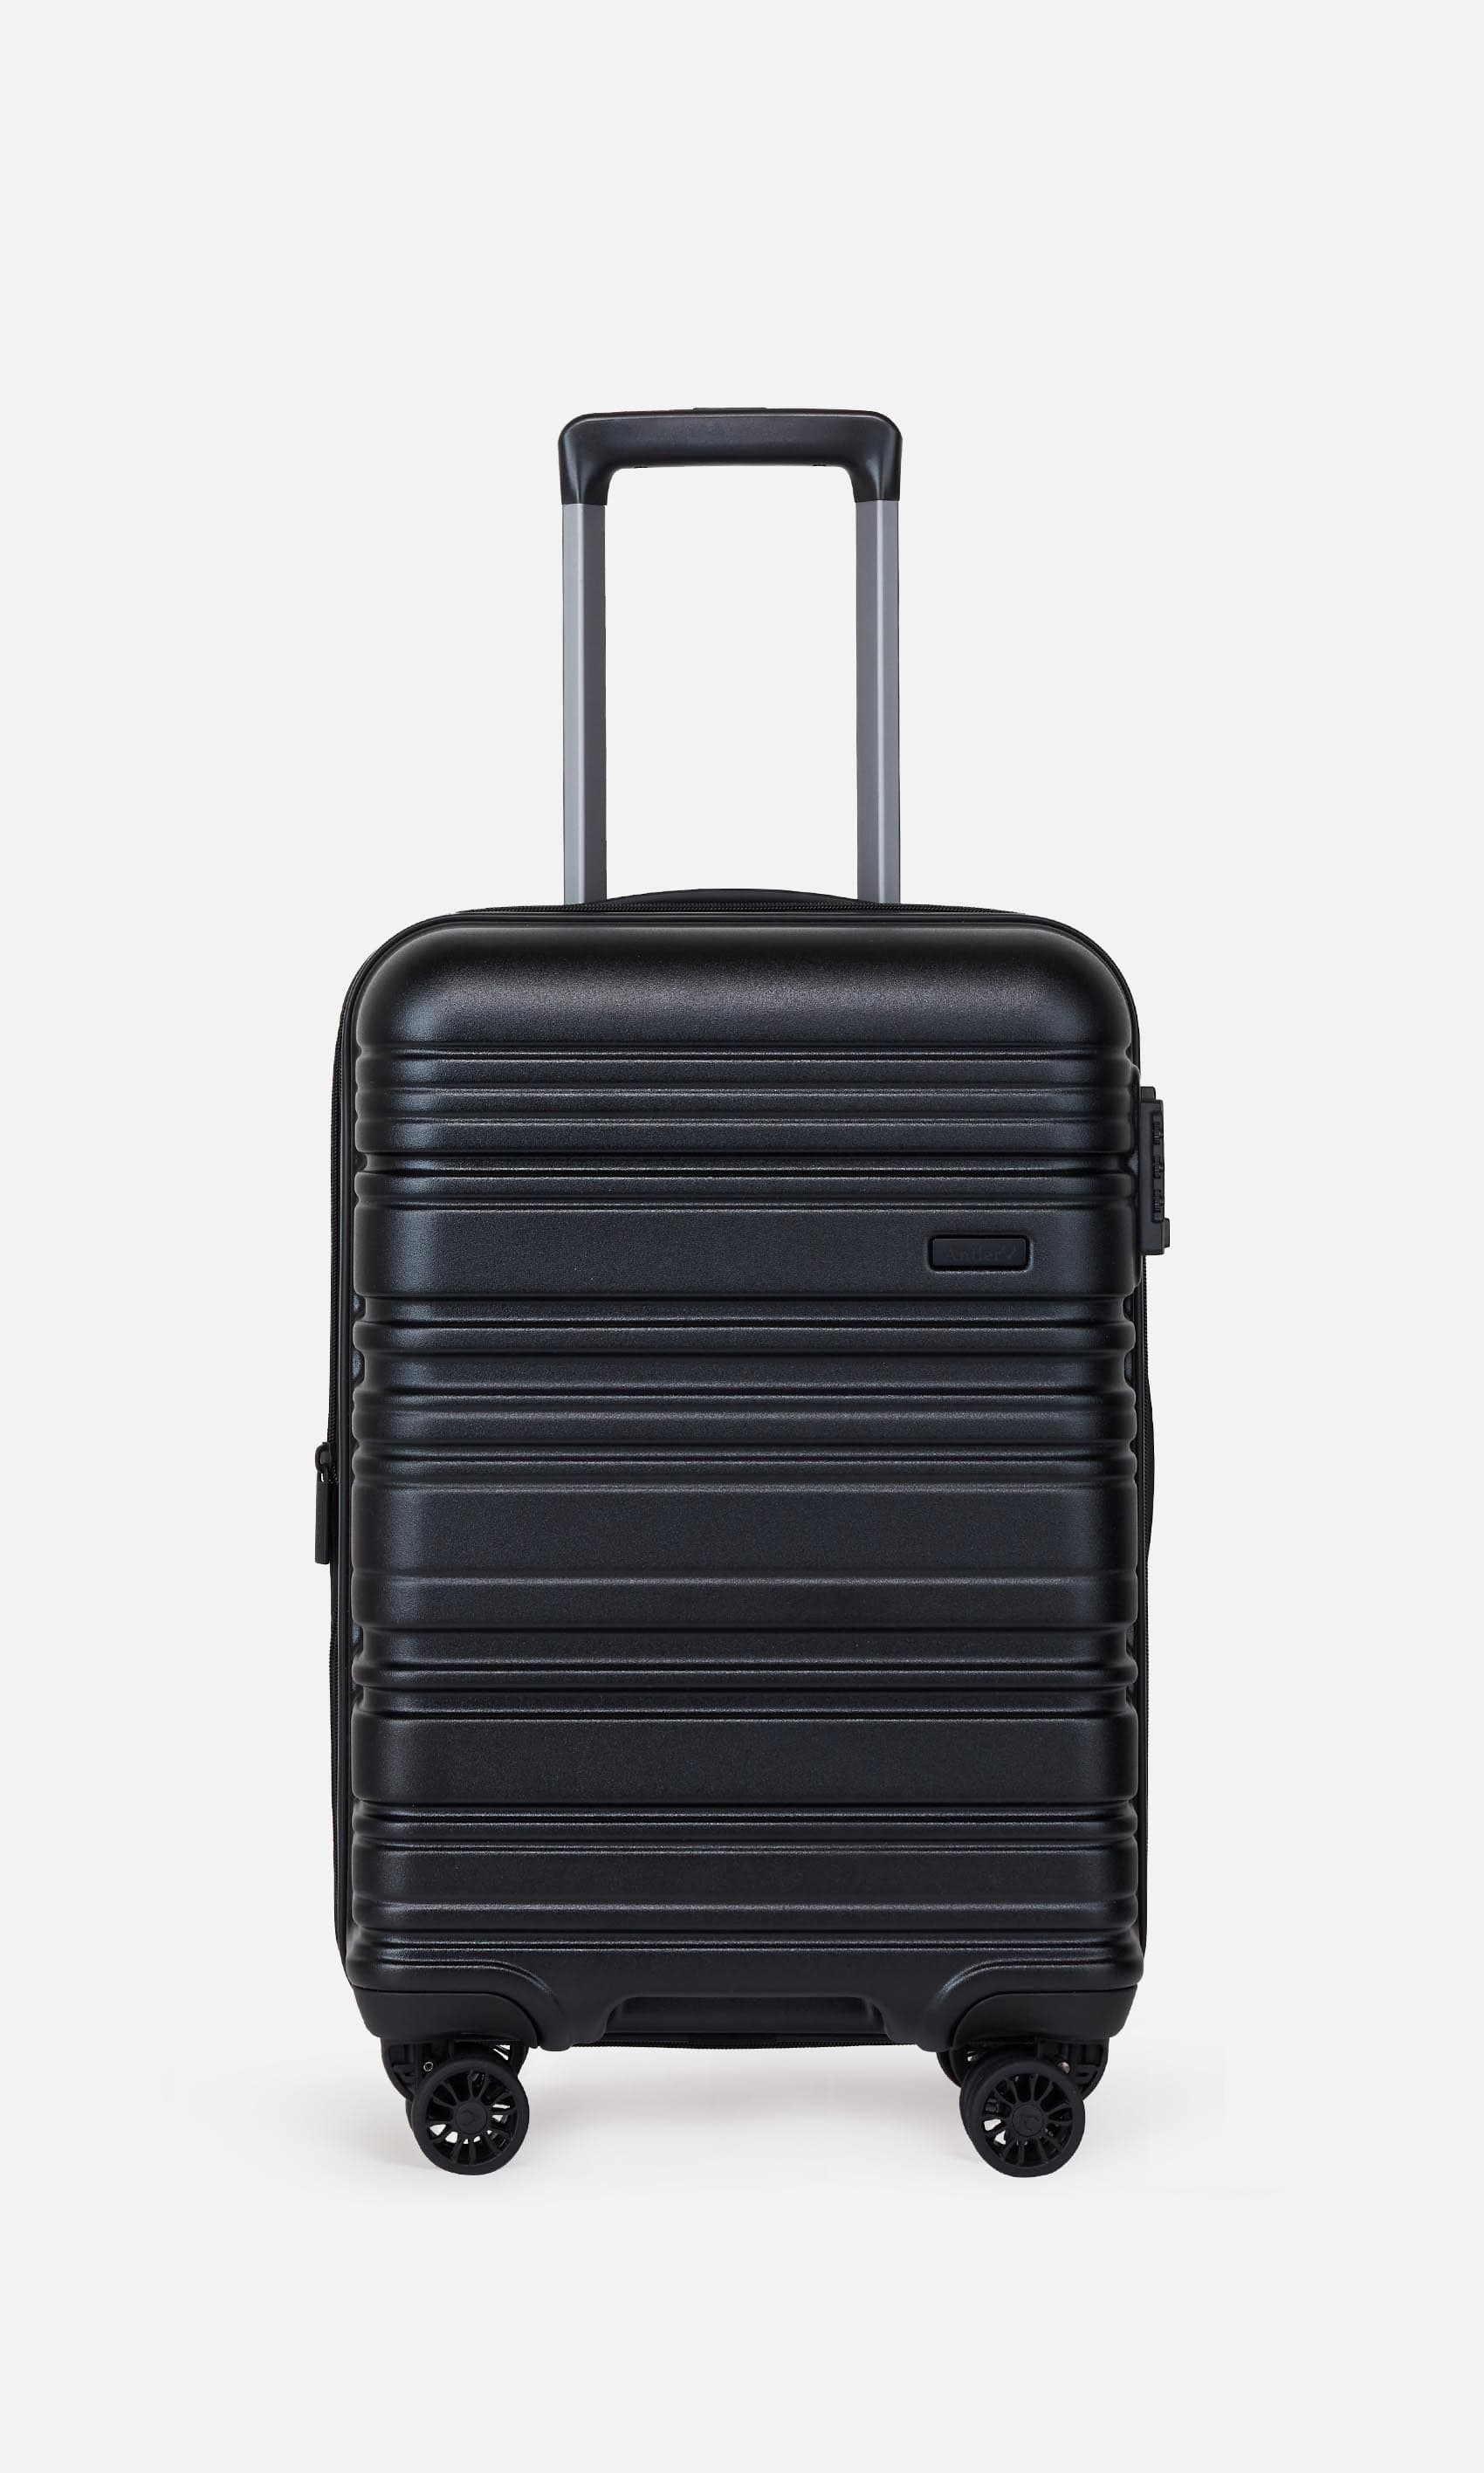 View Antler Saturn Cabin Suitcase In Black Size 36 x 545 x 245 cm information